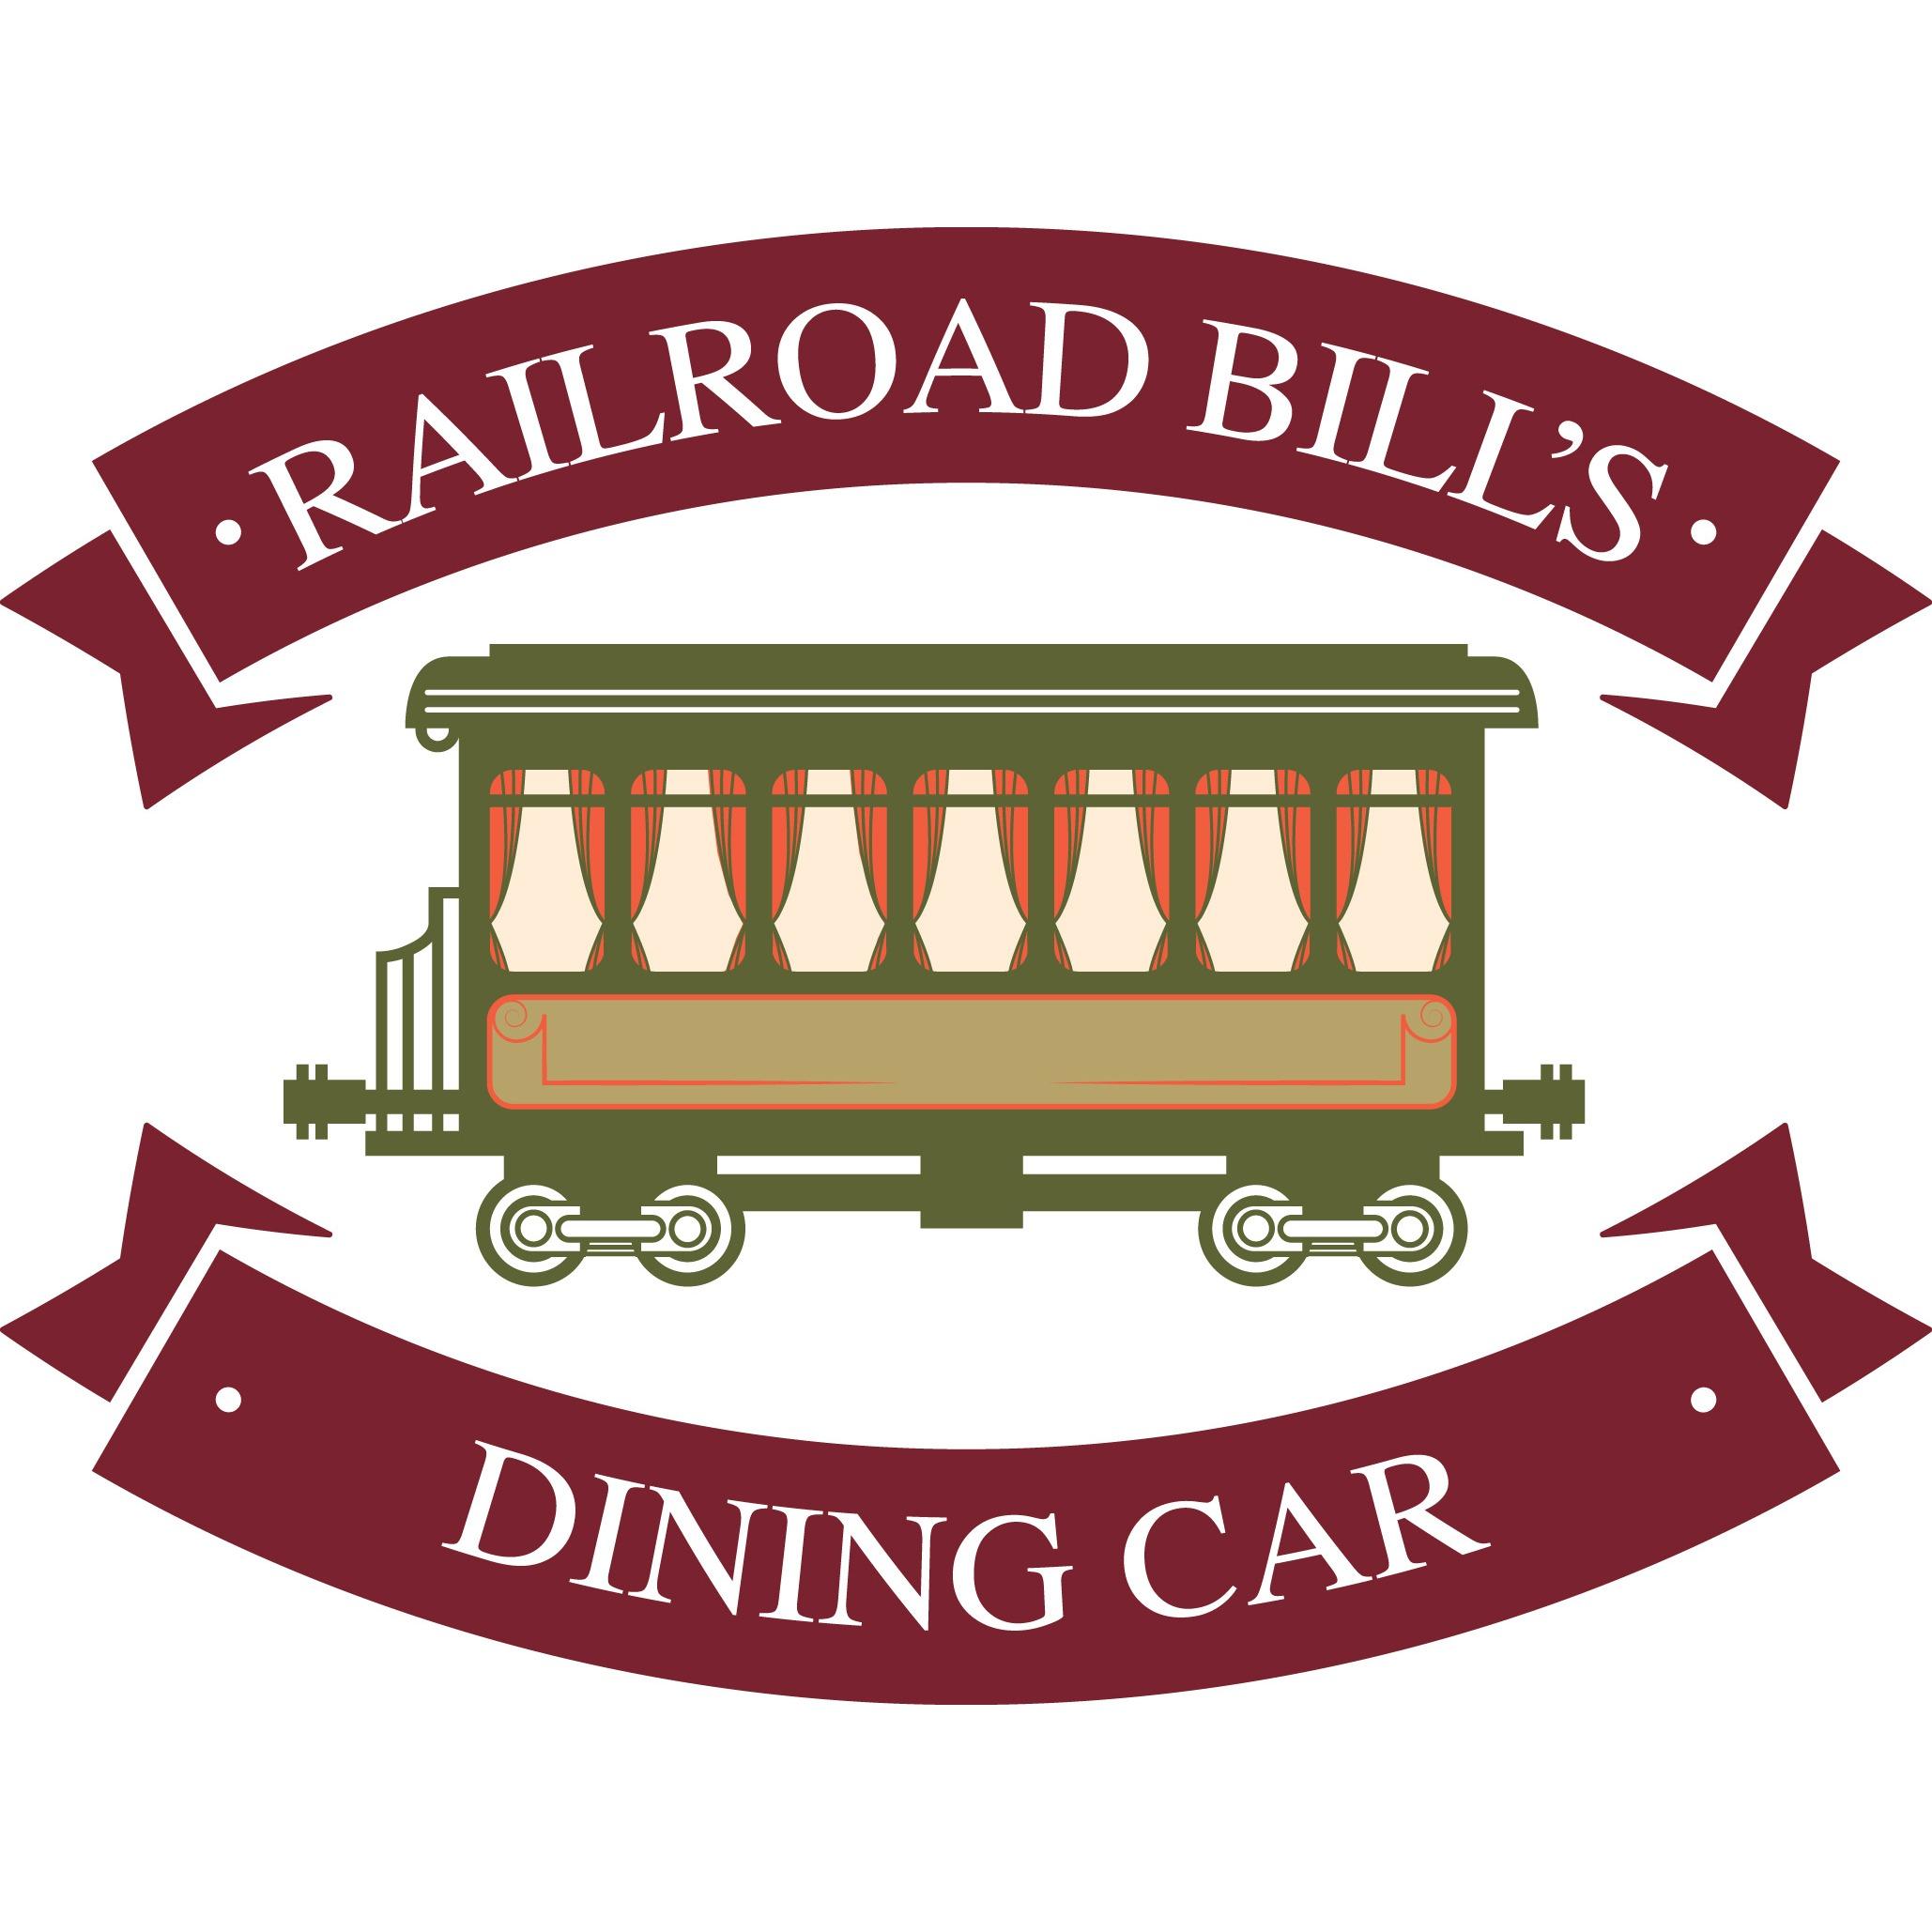 Railroad Bill's Dining Car Logo